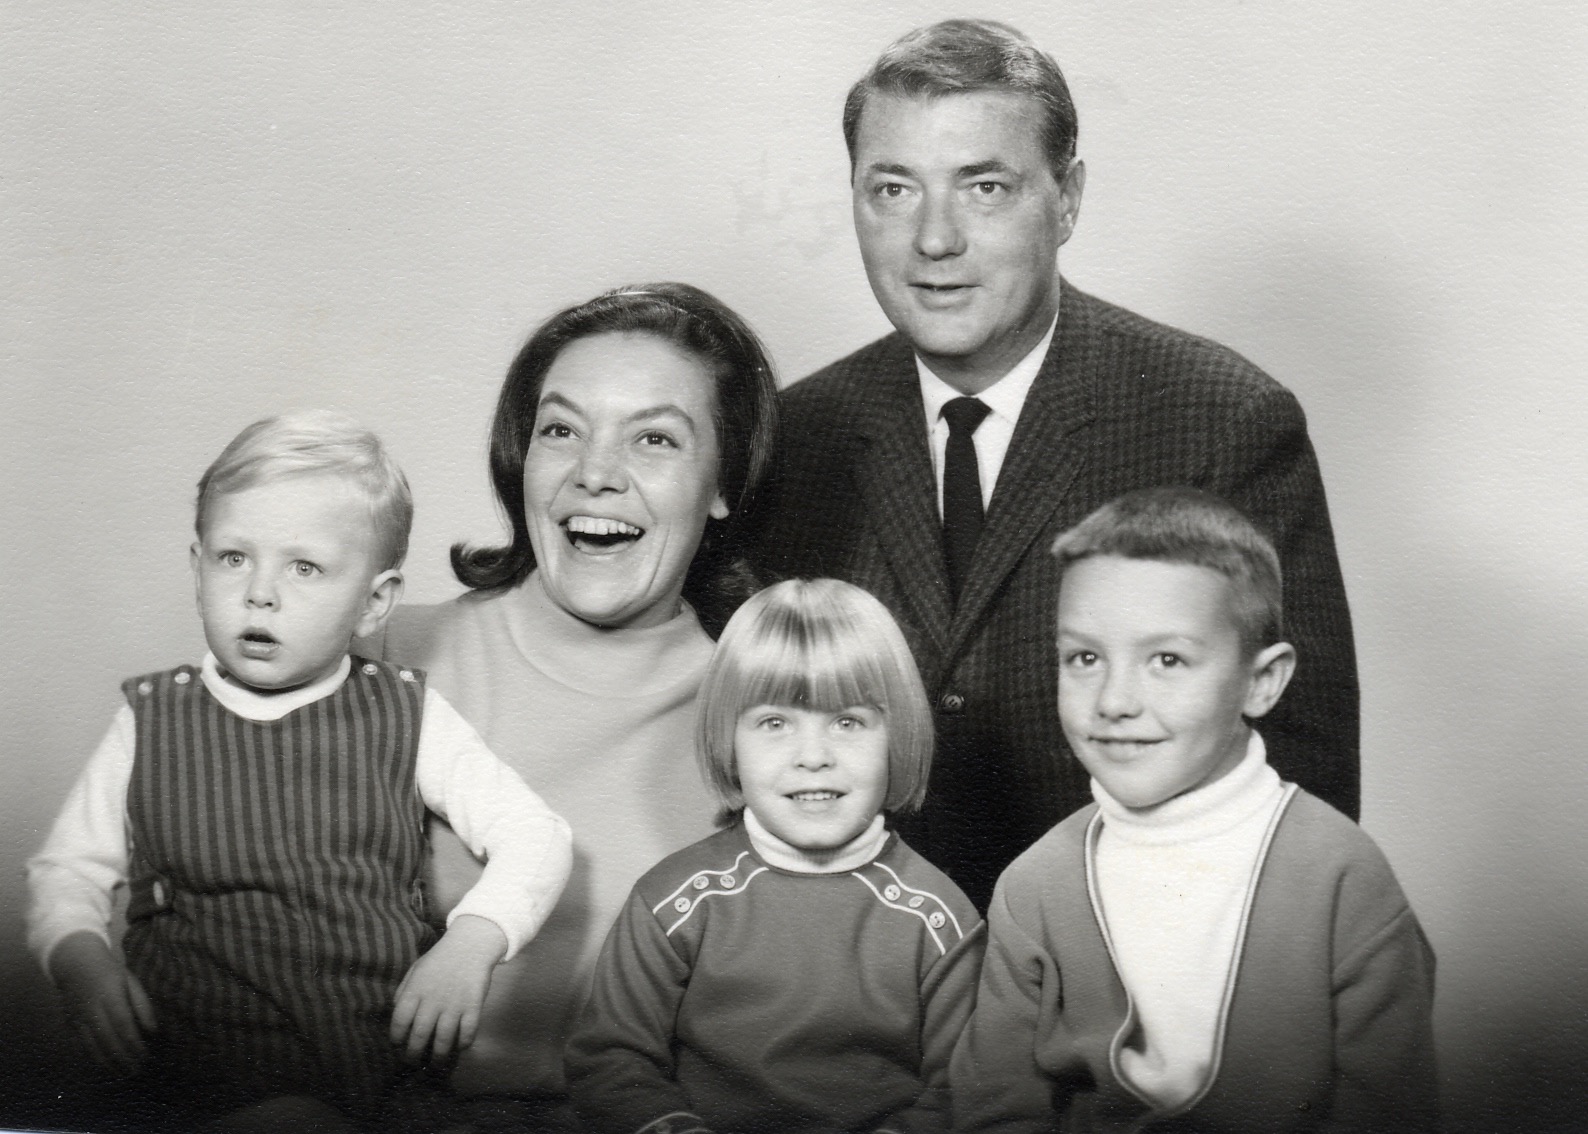 My brother (John), mom (Kathy), sister (Laura), dad (Richard), and me (nice crewcut), circa 1966.